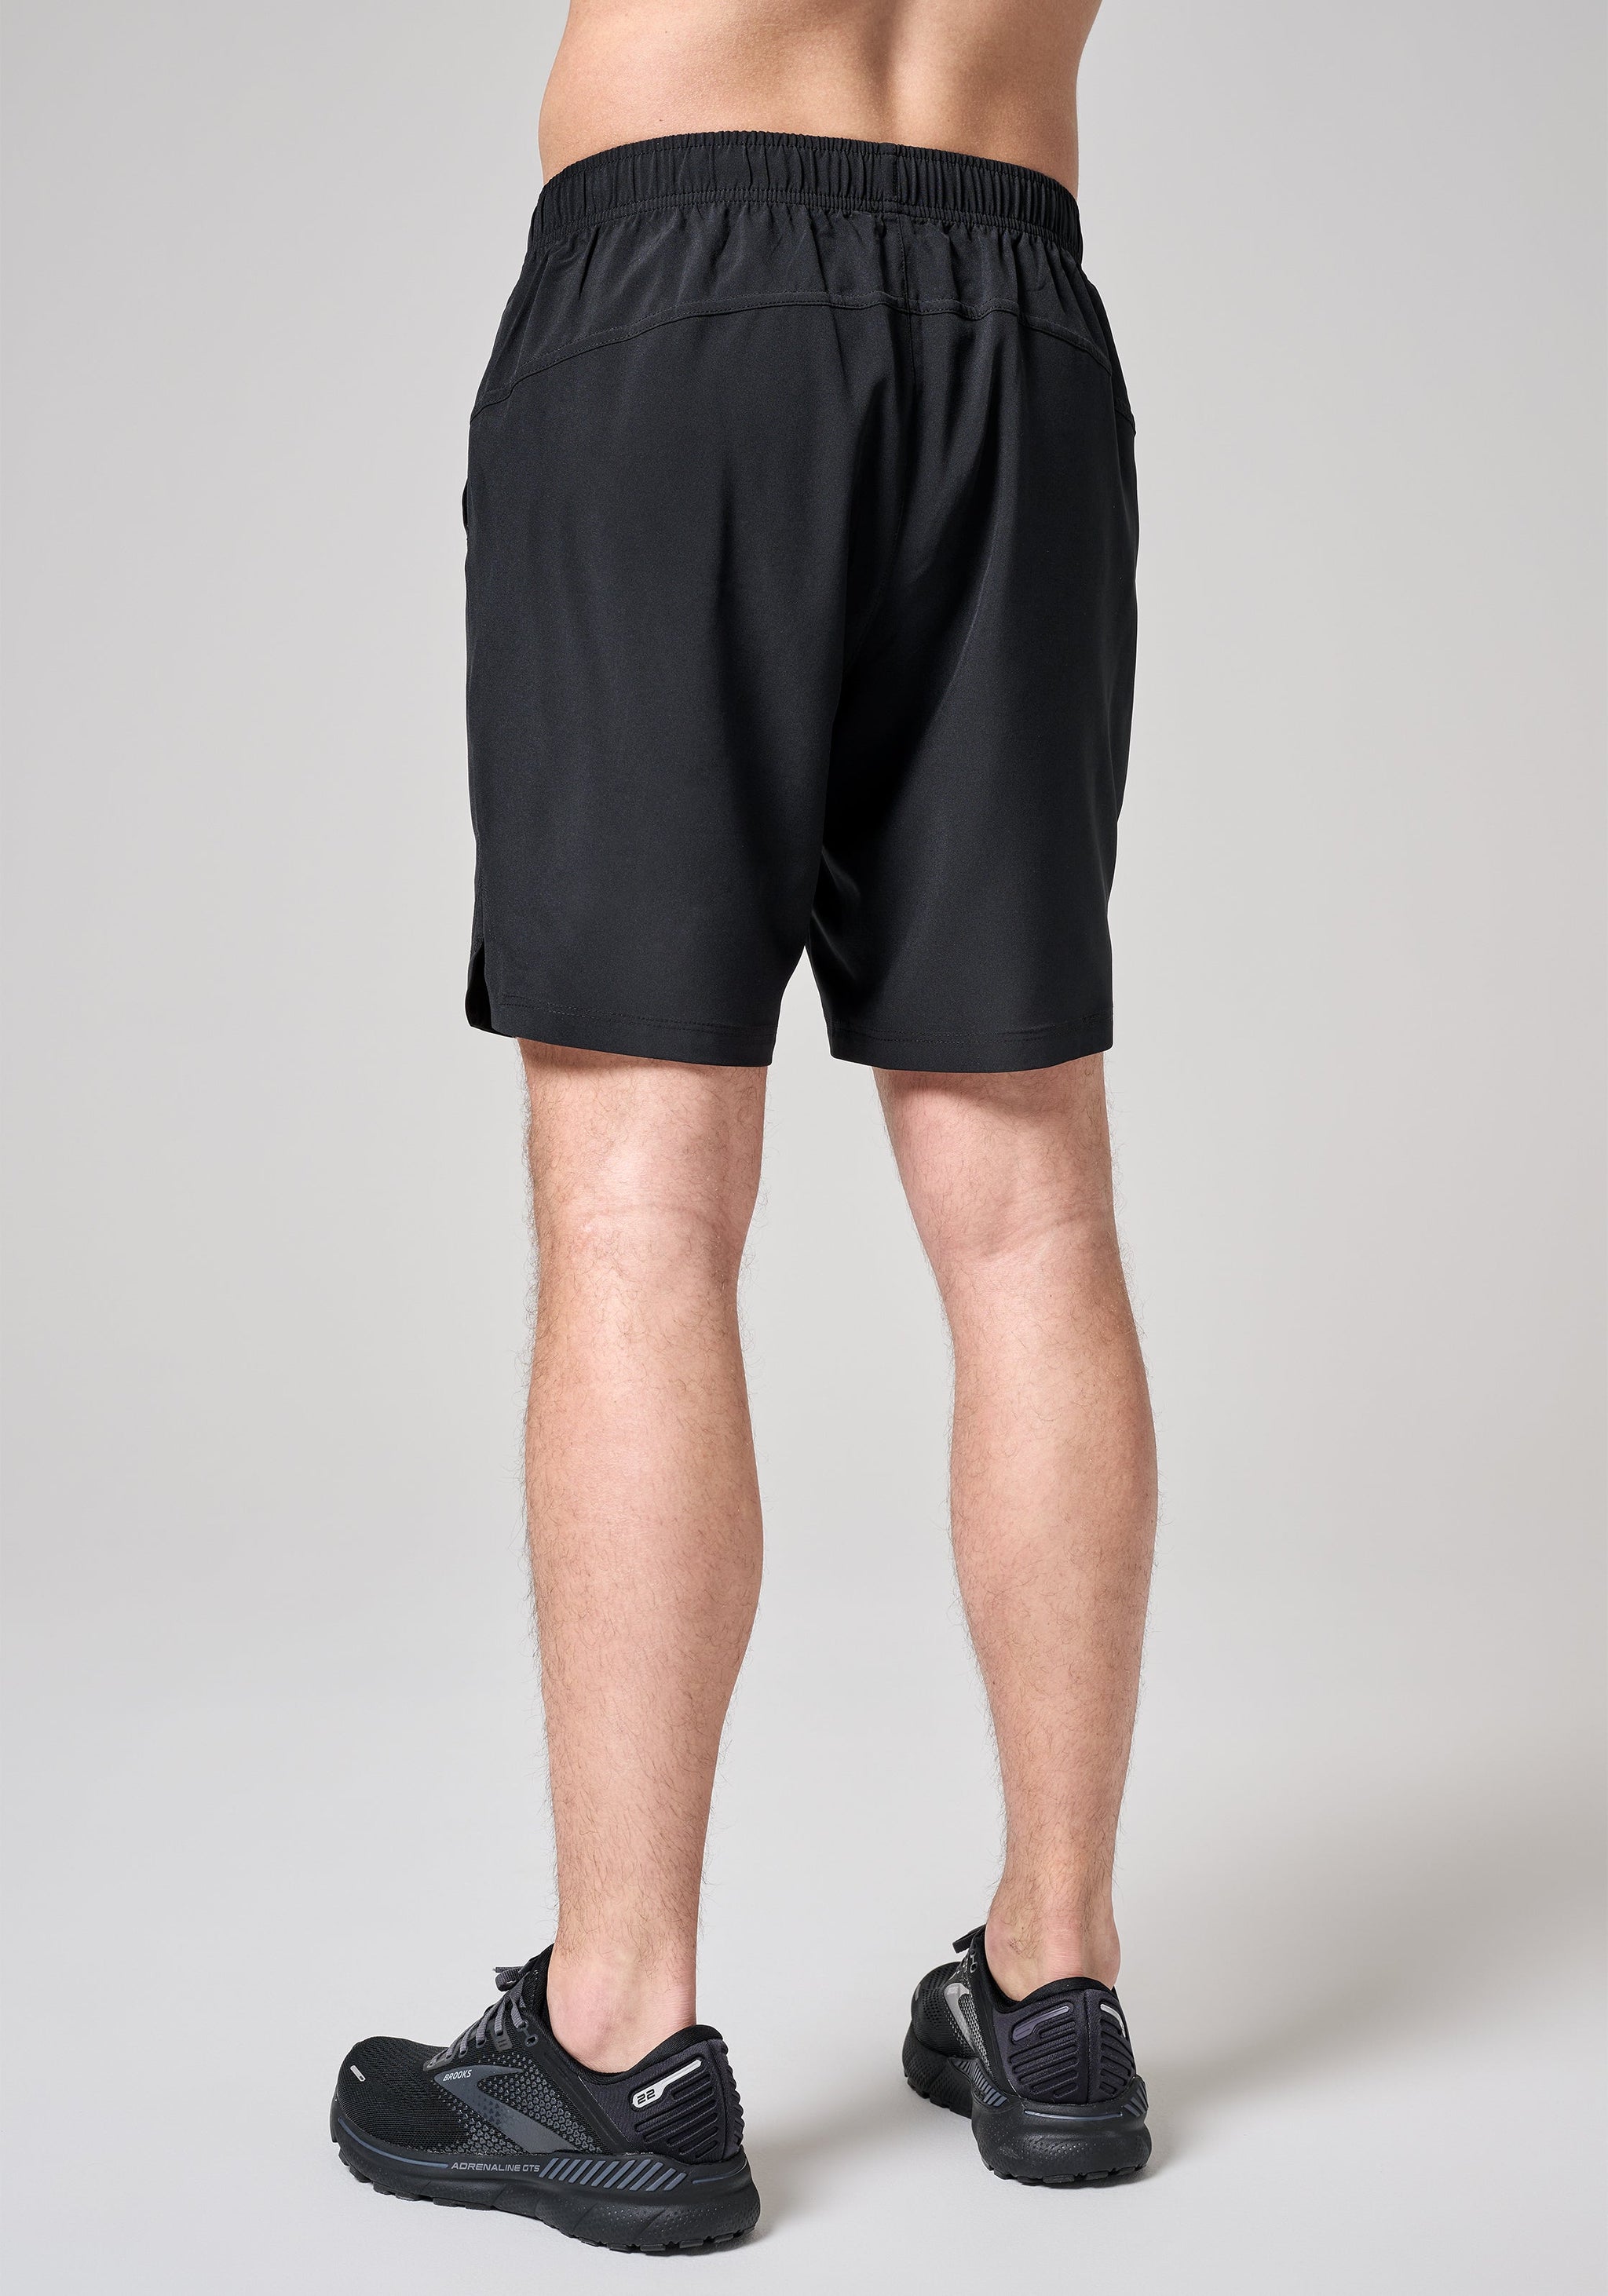 casall, Shorts, Casall Black Workout Shorts